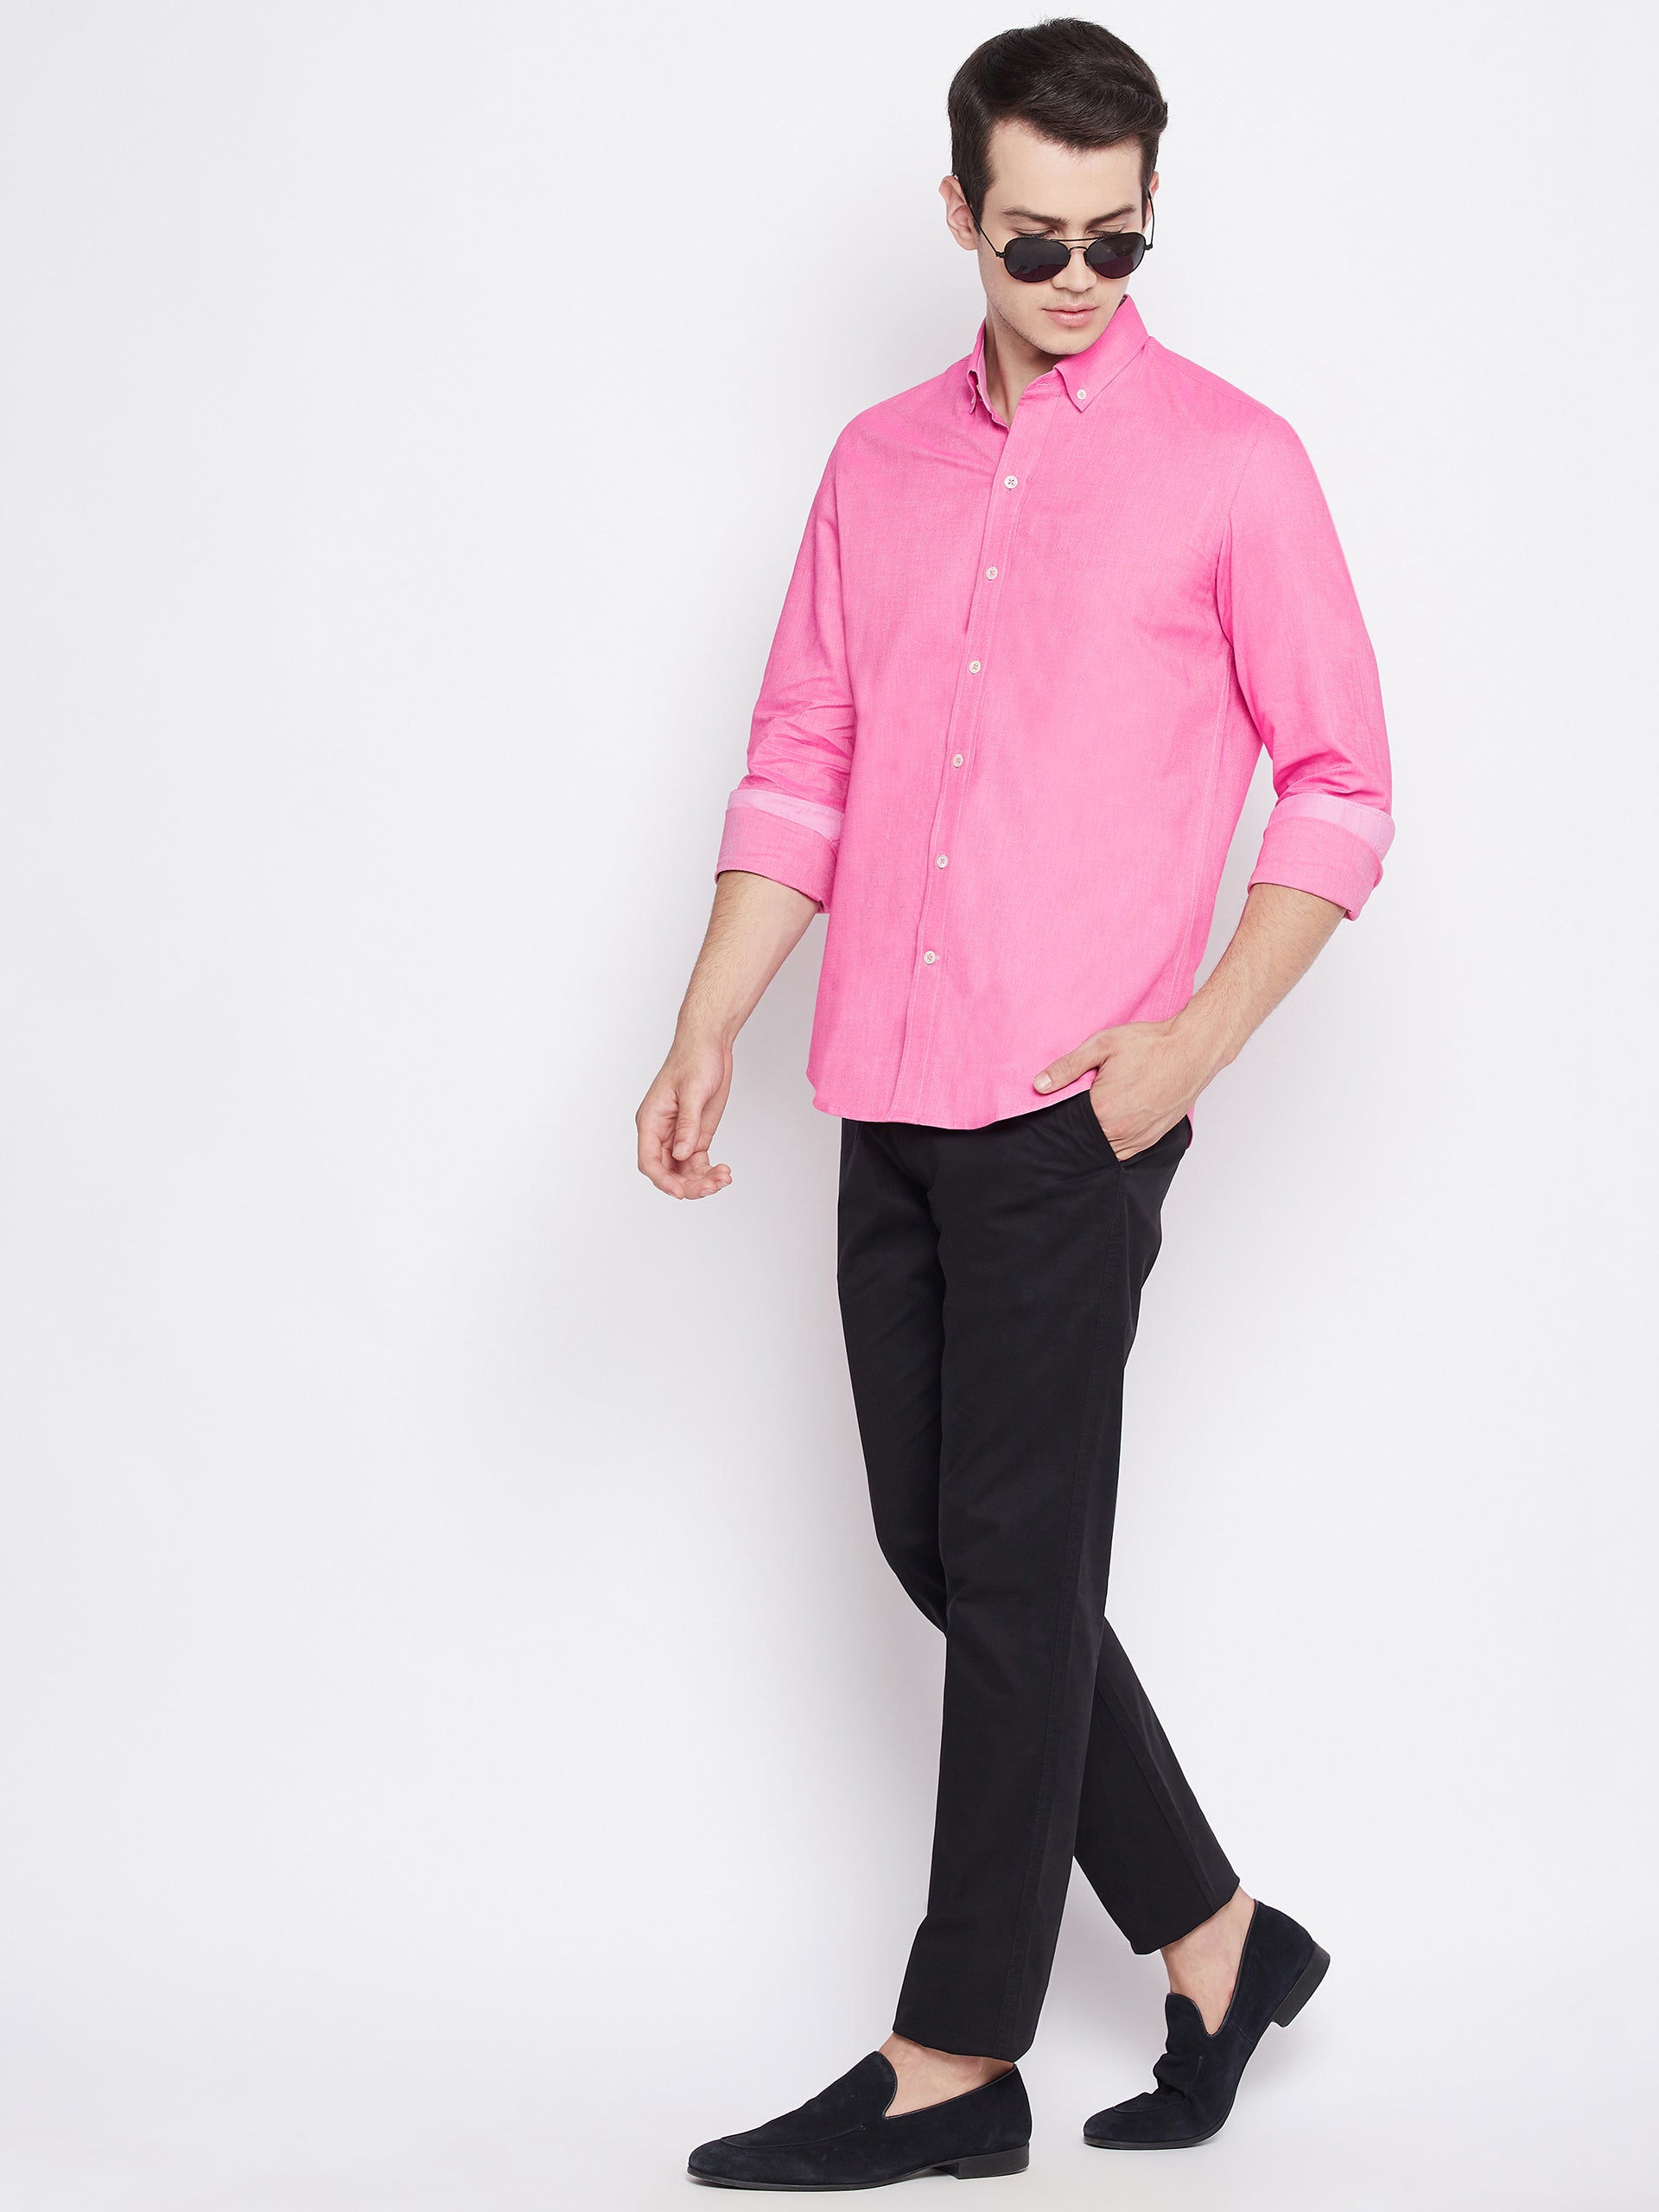 Regis Pink Oxford Cotton Shirt